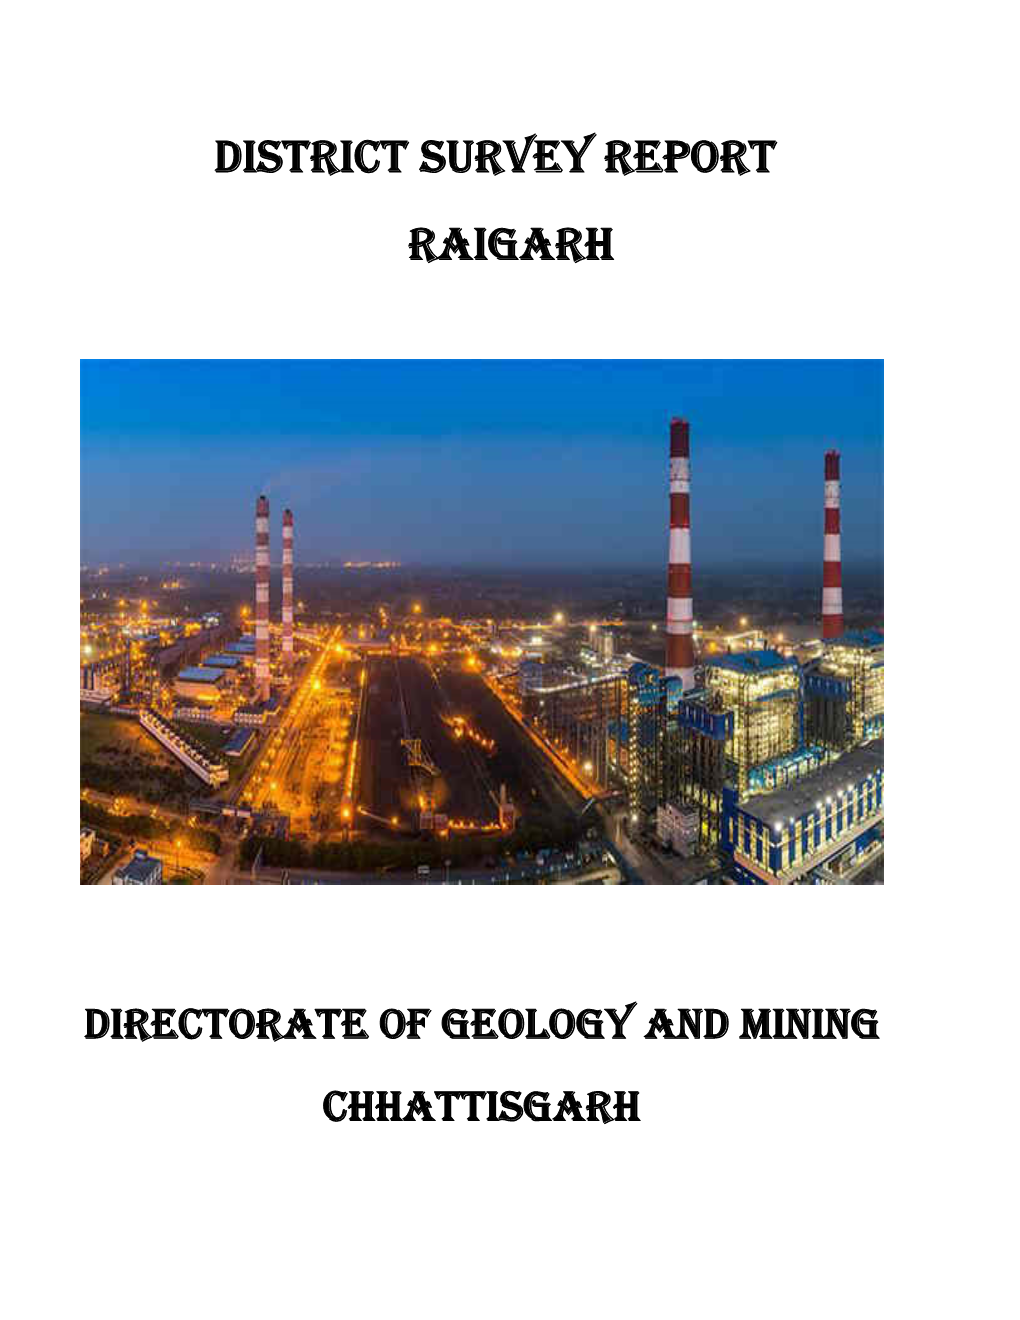 District Survey Report Raigarh